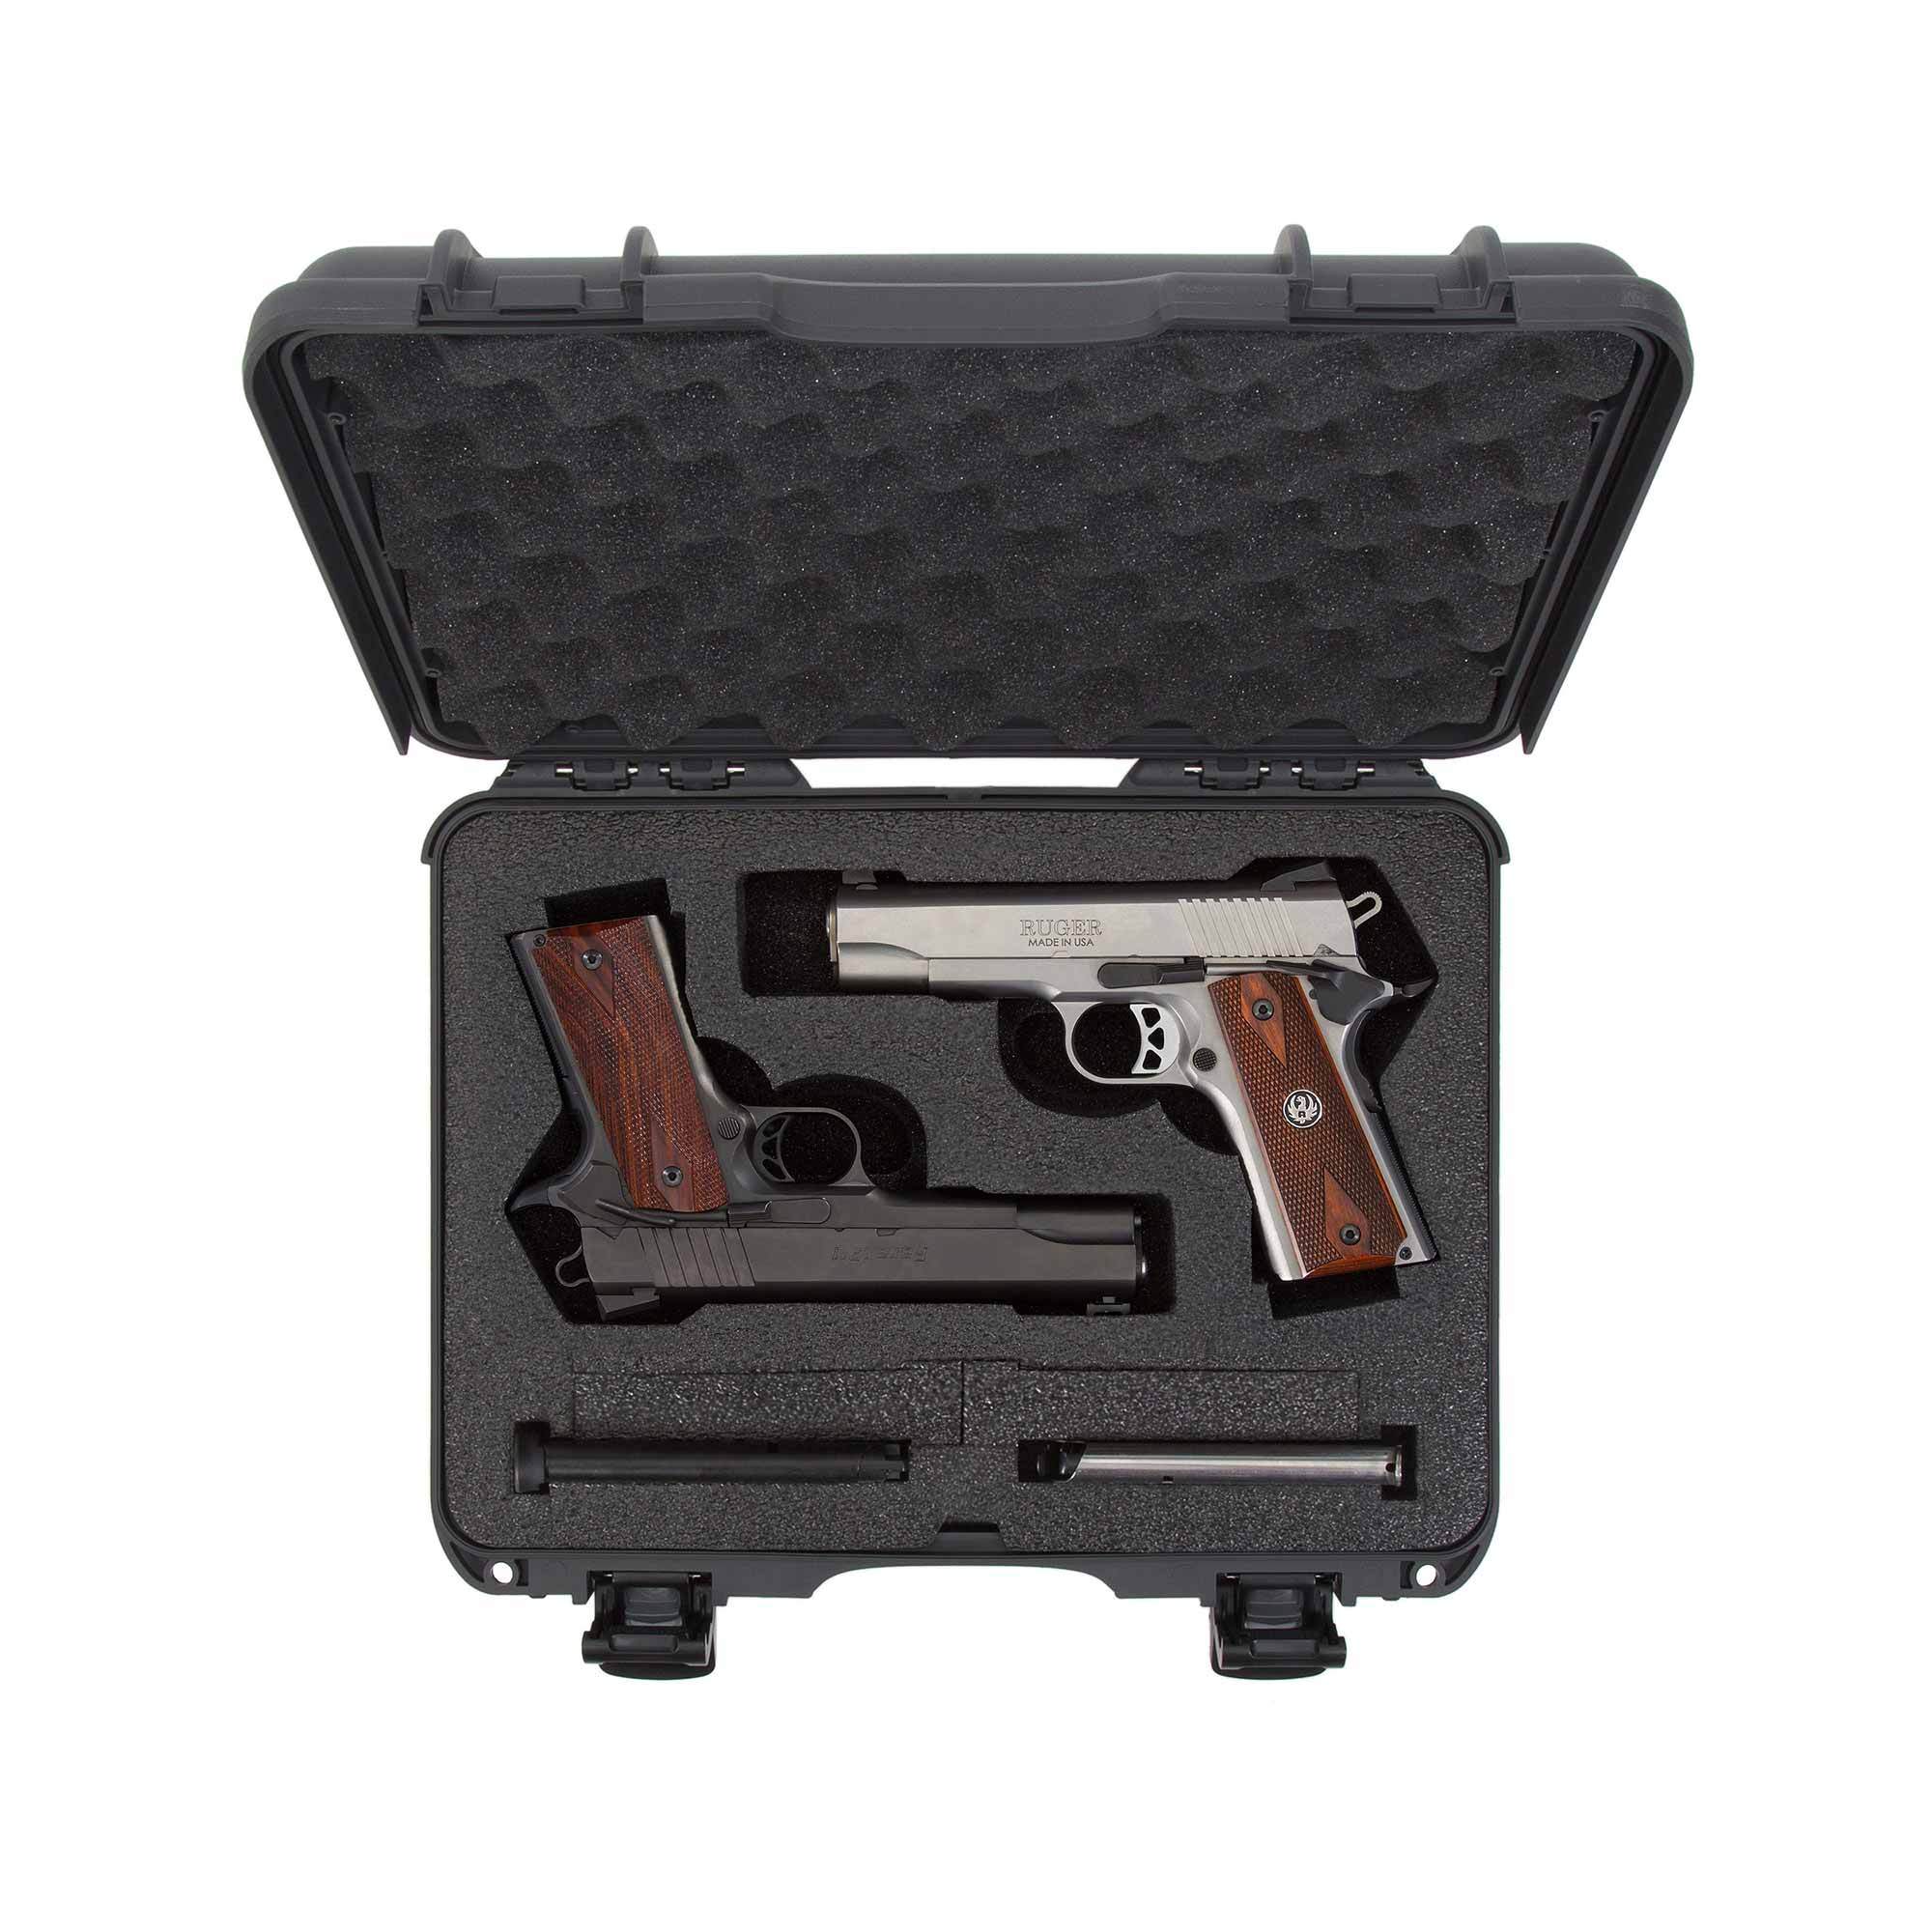 Nanuk 910 2UP Classic Gun Case - Black